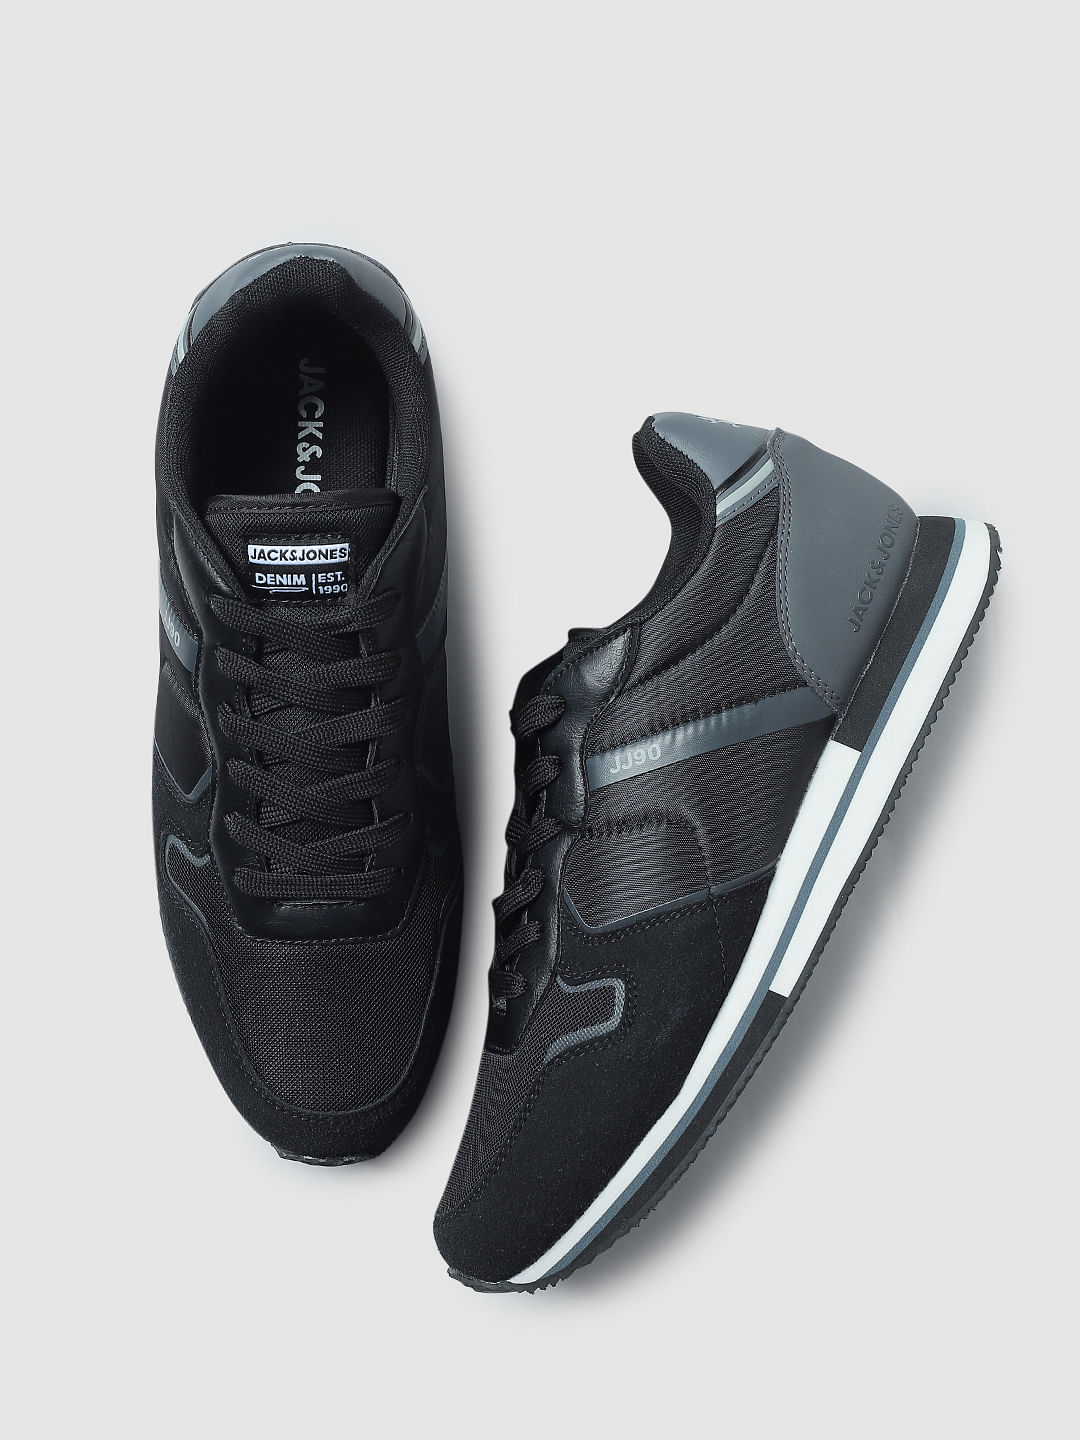 Shirt To Jordan 5 Jade Horizon Retro 5s Shoes - Fresh Sneakers Sneaker Tee  | eBay